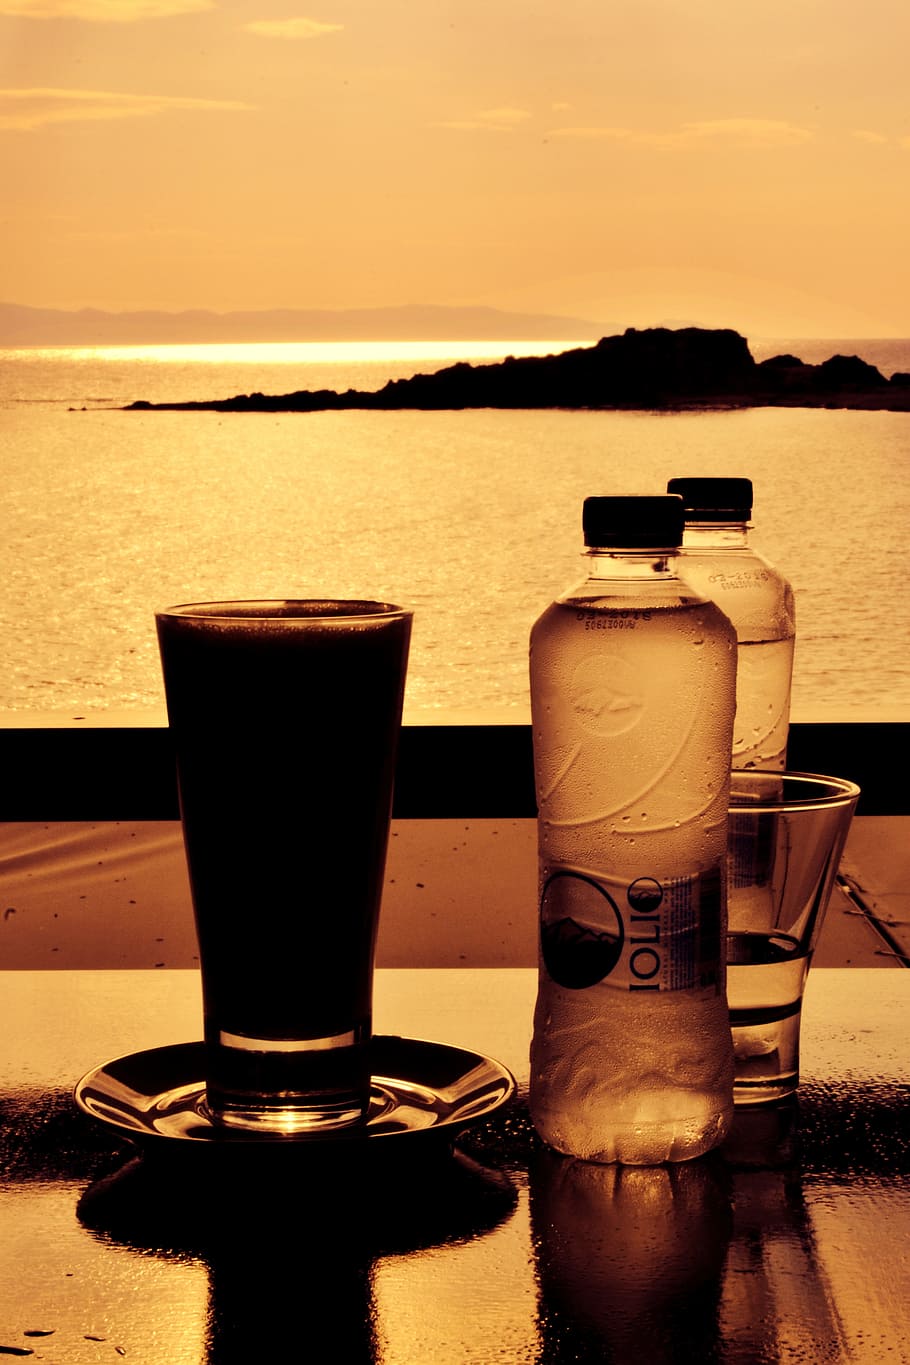 coffee with a view, coffee by the sea, sunset, landscape, seascape, orange, romantic, scene, silhouettes, sea